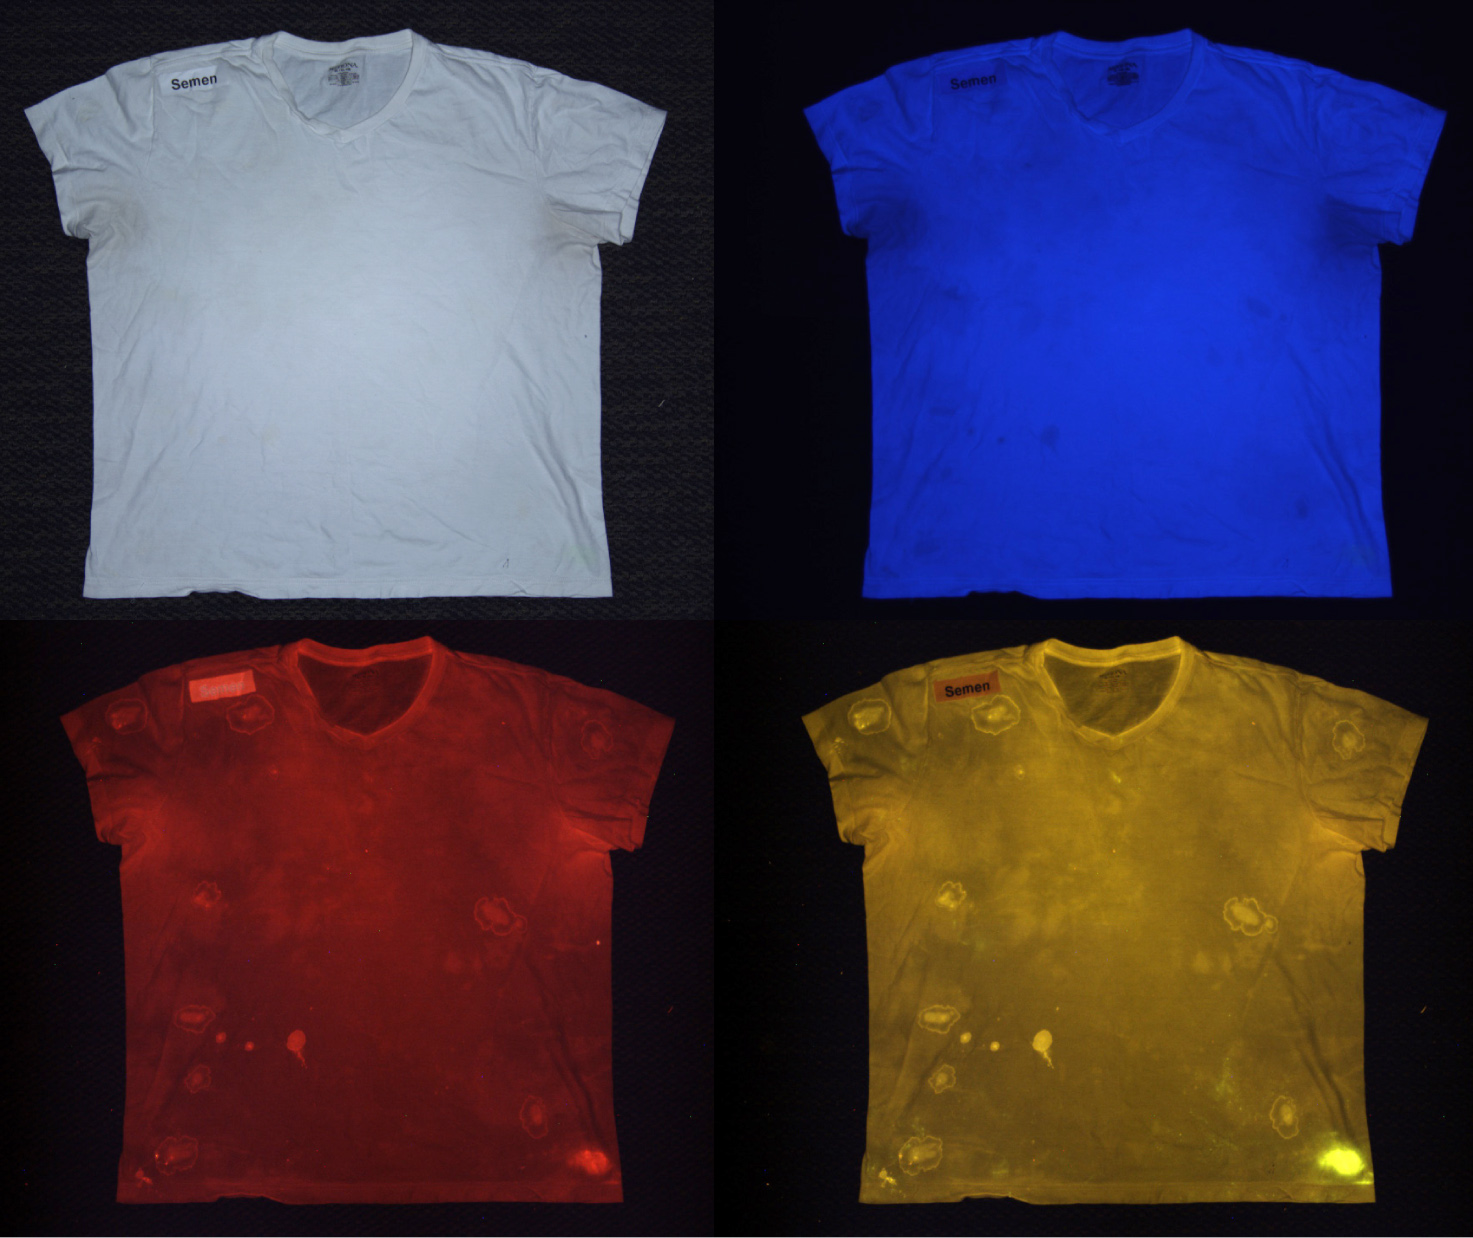 LSV2 images of same white shirt under various lighting options